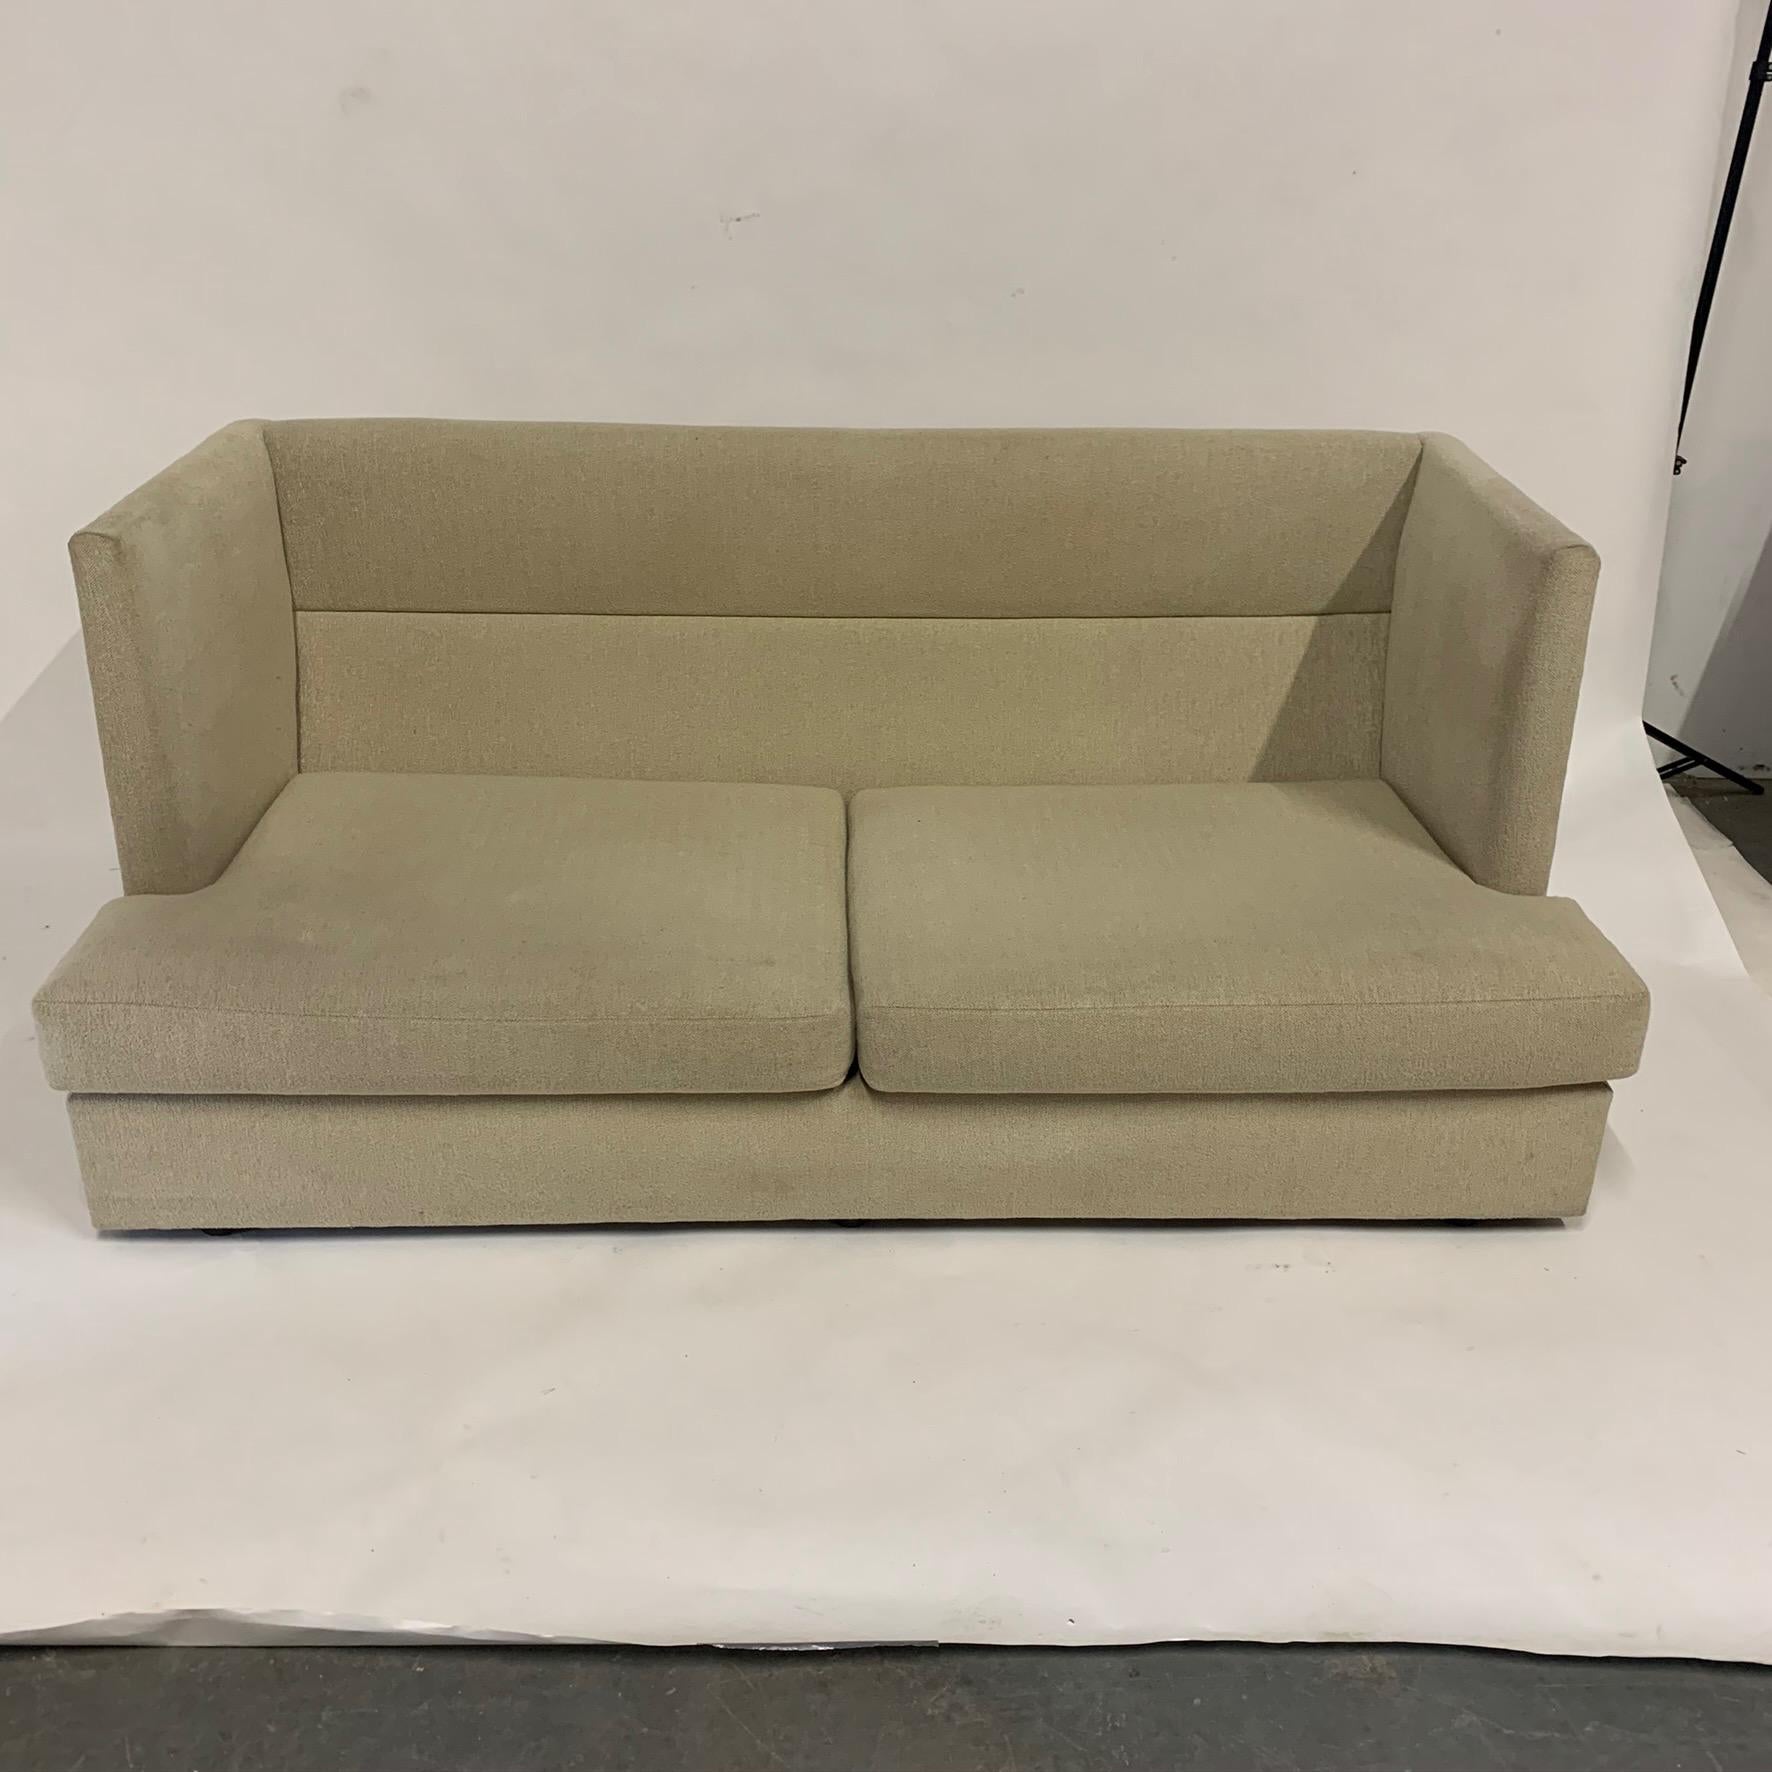 Upholstery Stunning Milo Baughman Shelter Sofa w Down Pillows- Very Comfortable